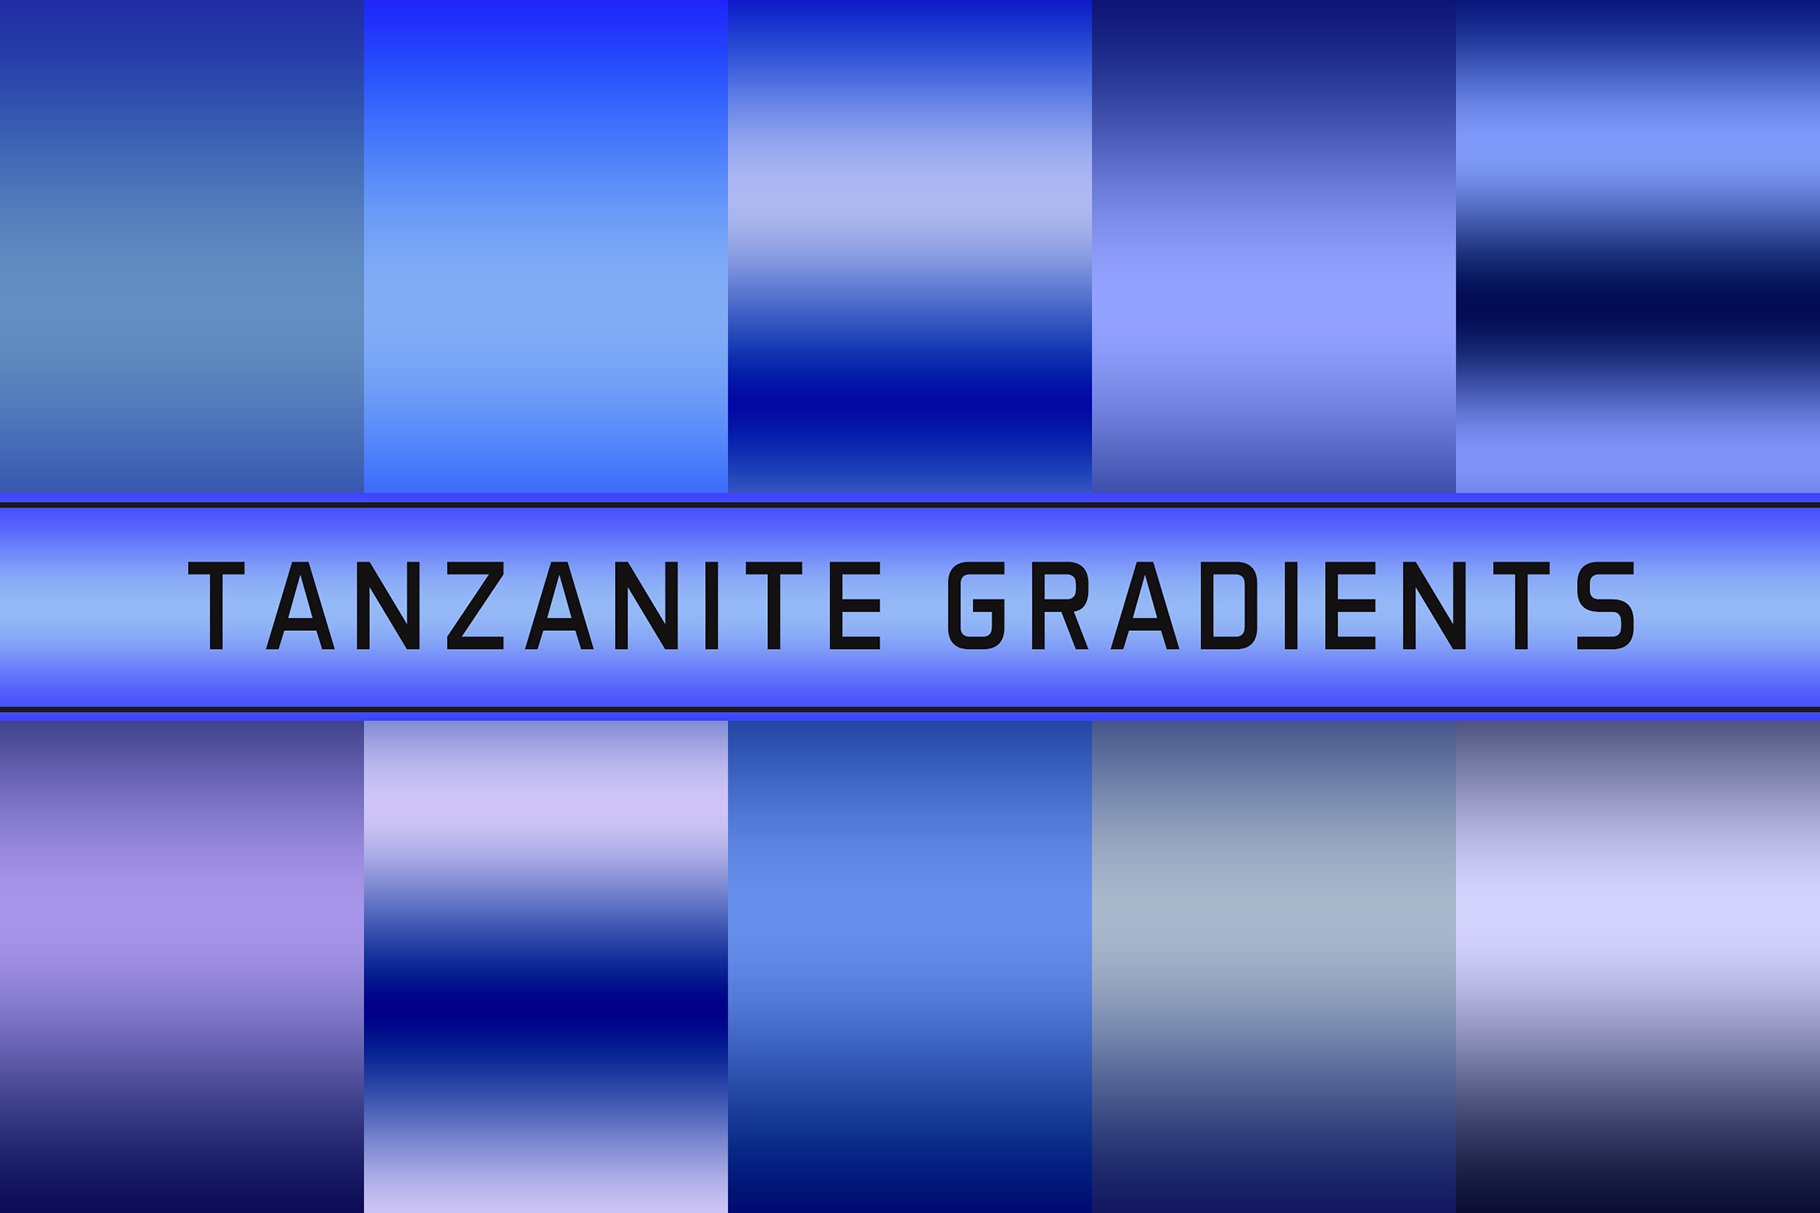 Tanzanite Gradientscover image.